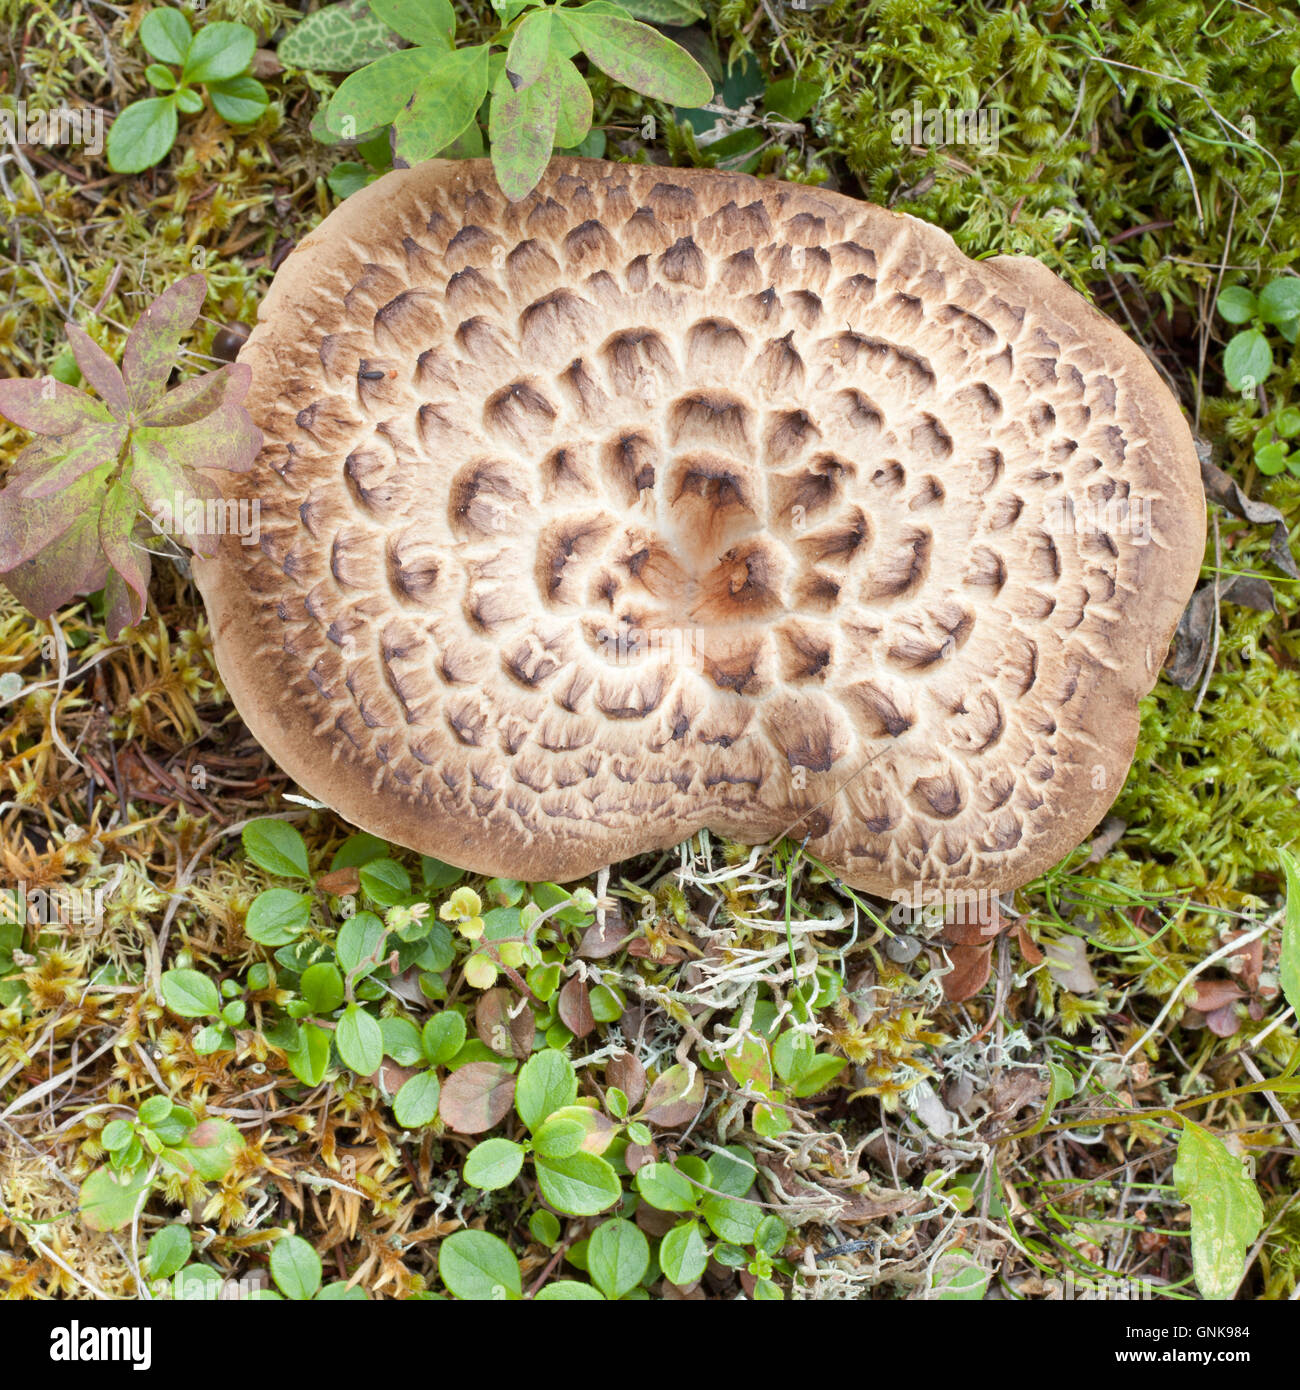 Shingled Hedgehog Mushroom growing on forest floor Stock Photo